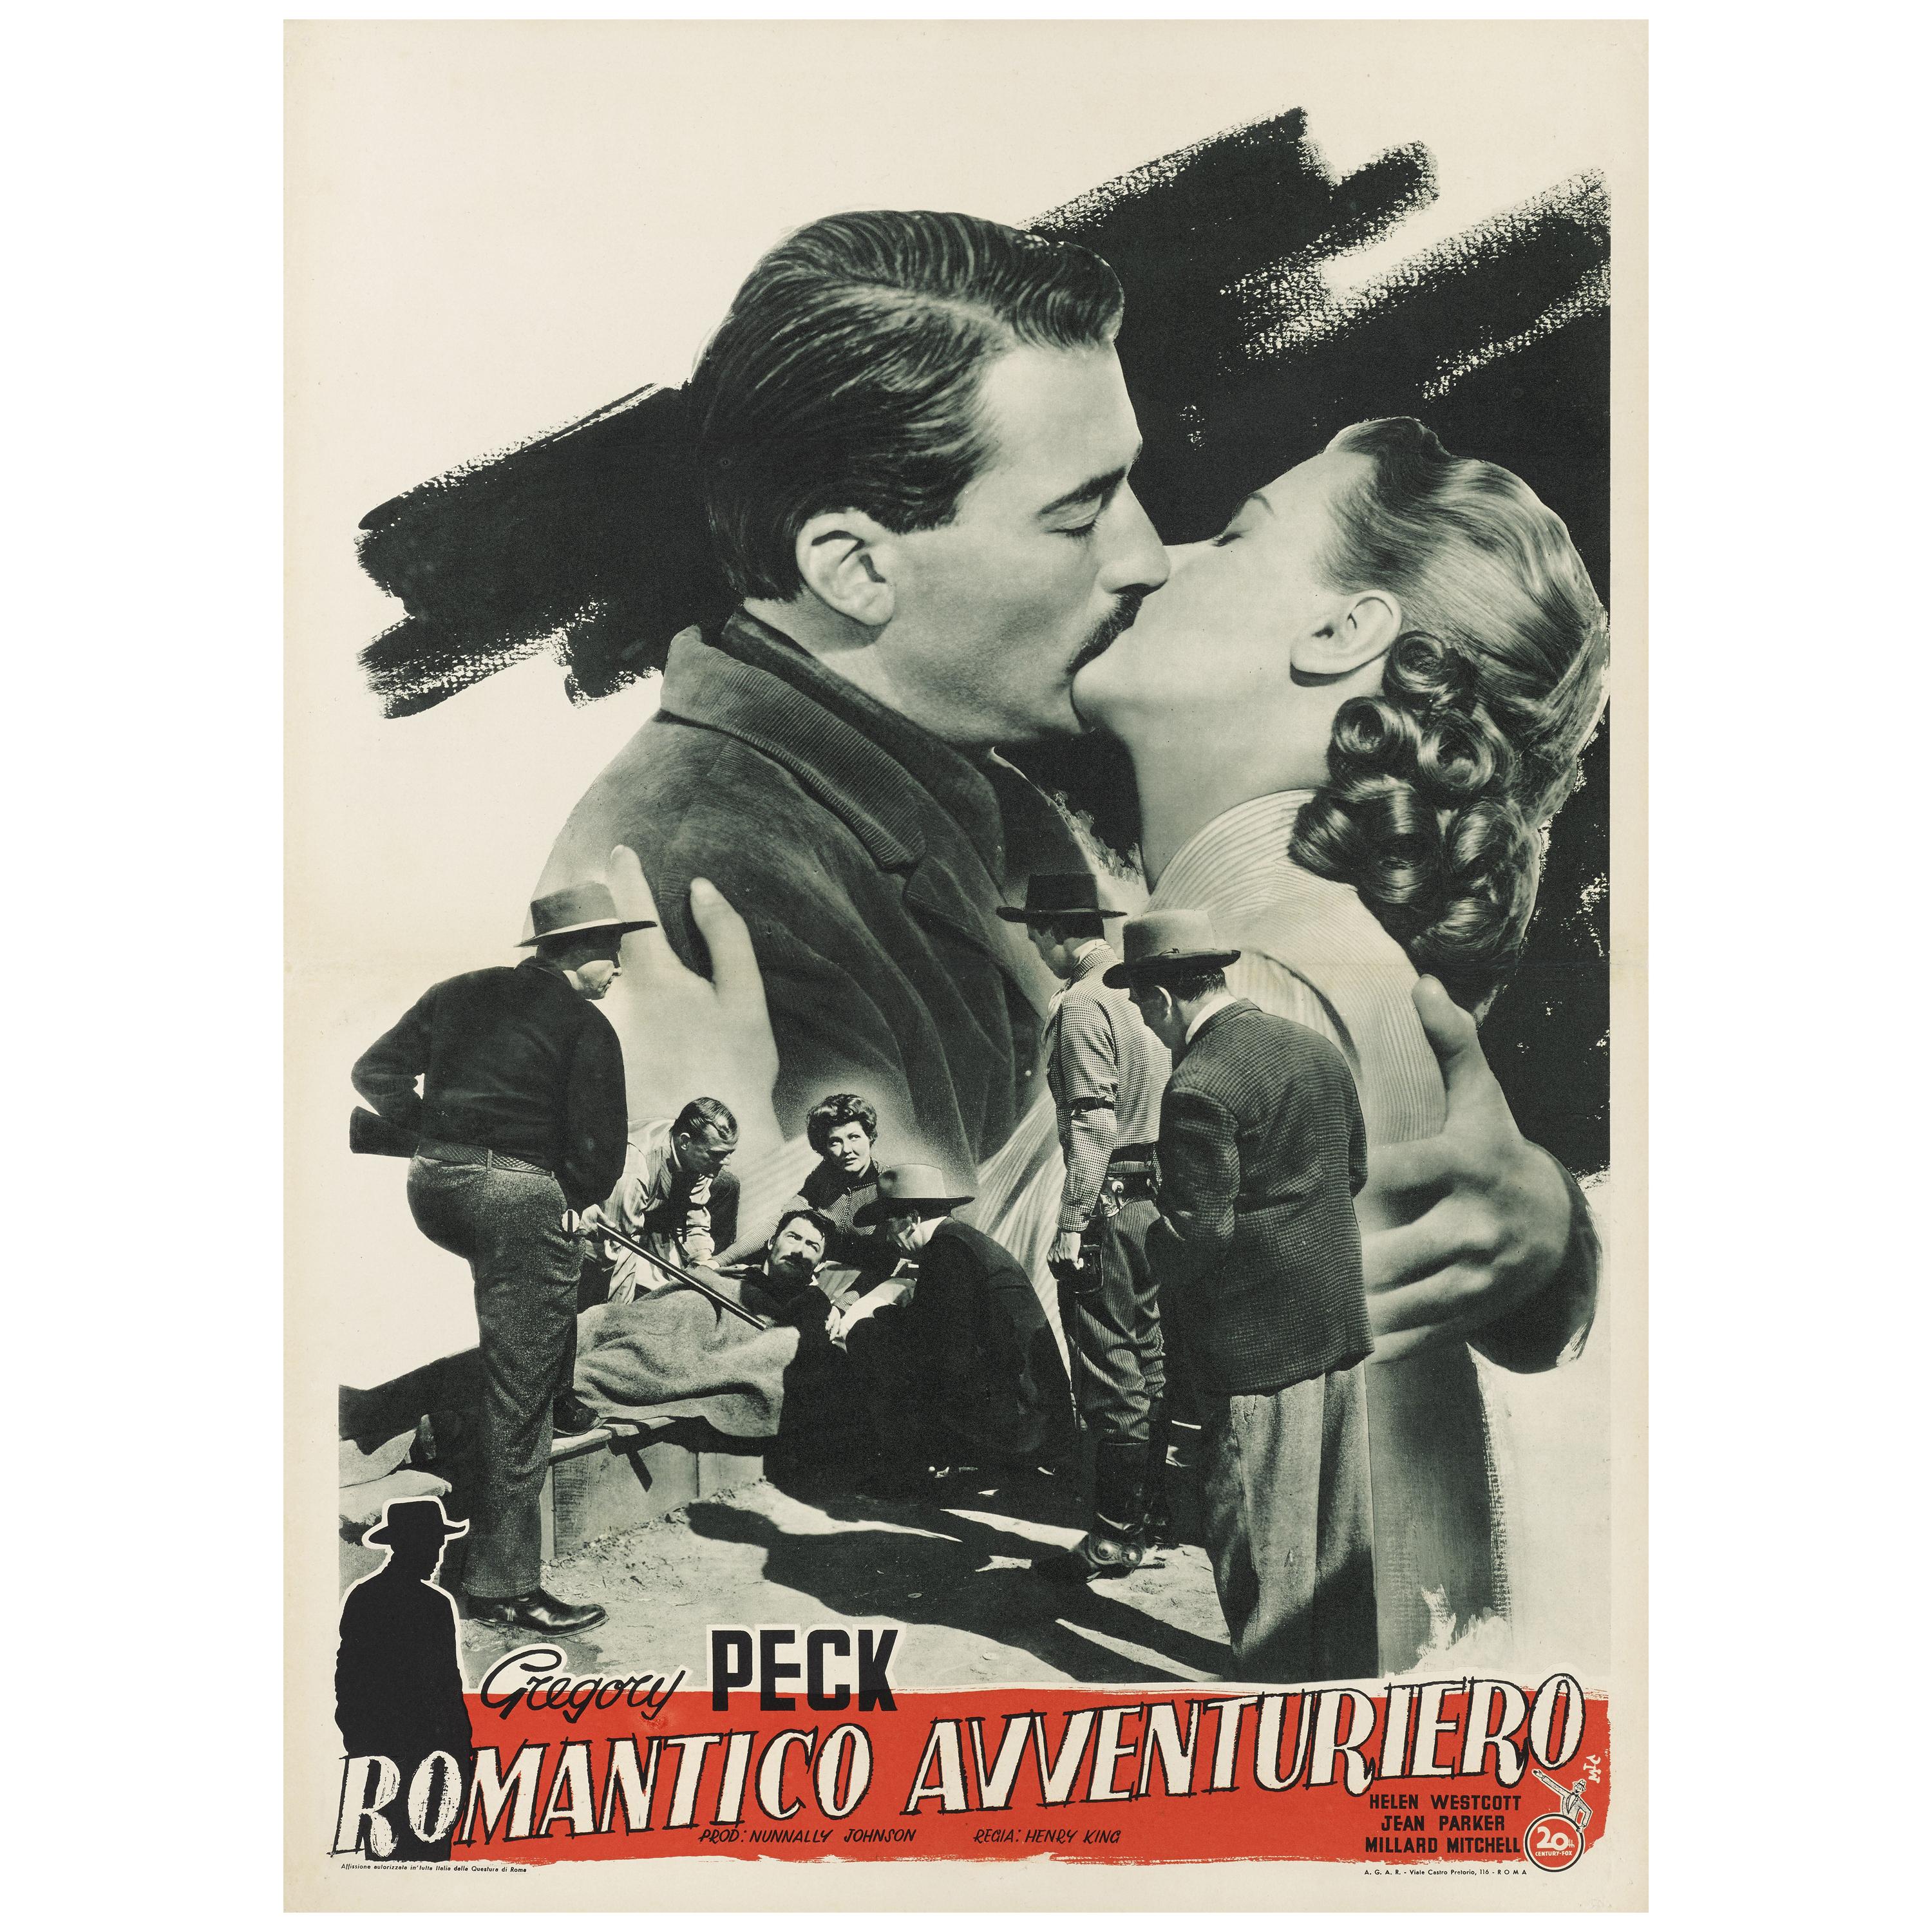 "The Gunfighter or Romantico Avventuriero" Film Poster